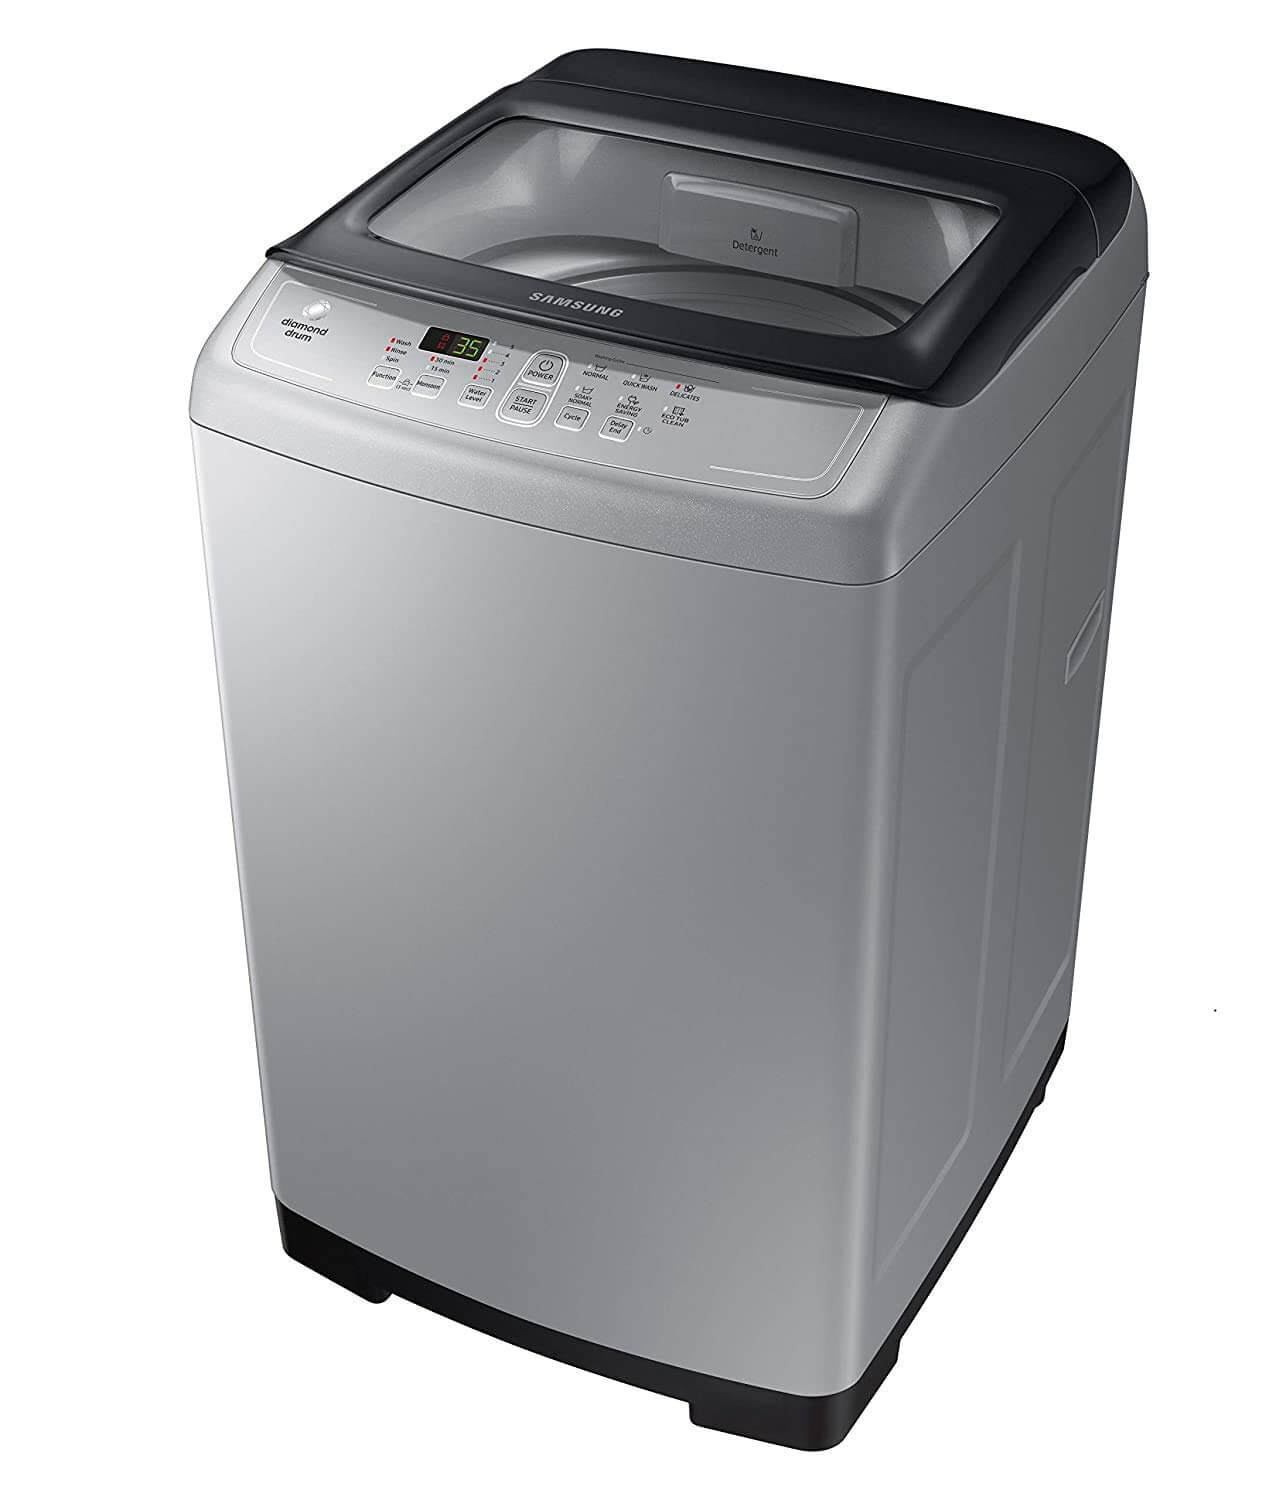 Samsung fully automatic washing machine